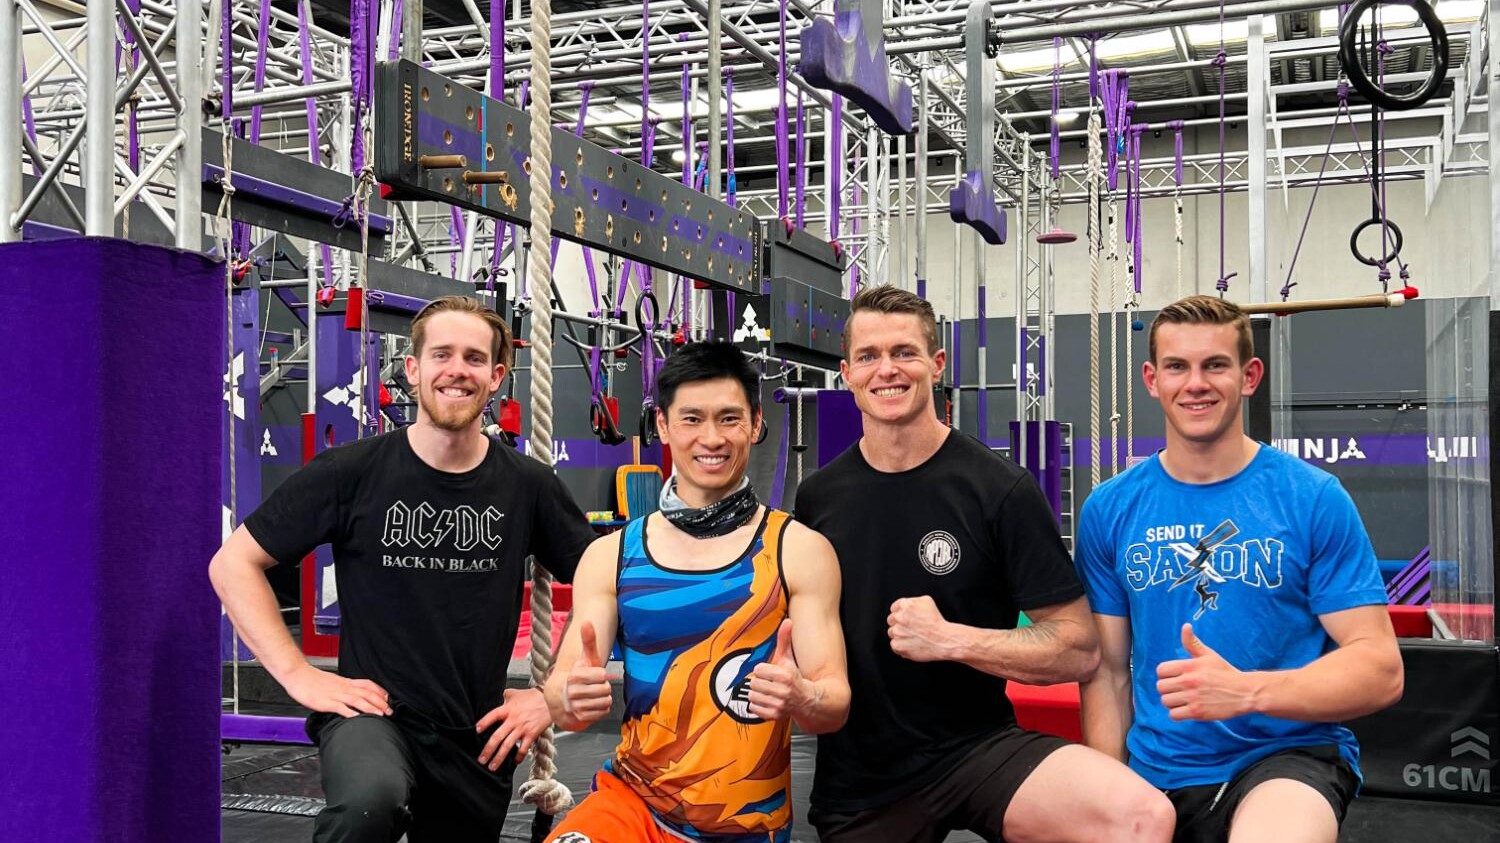 Post 0-5 Post 0 5 uai at a Ninja Warrior gym in Melbourne, Australia.